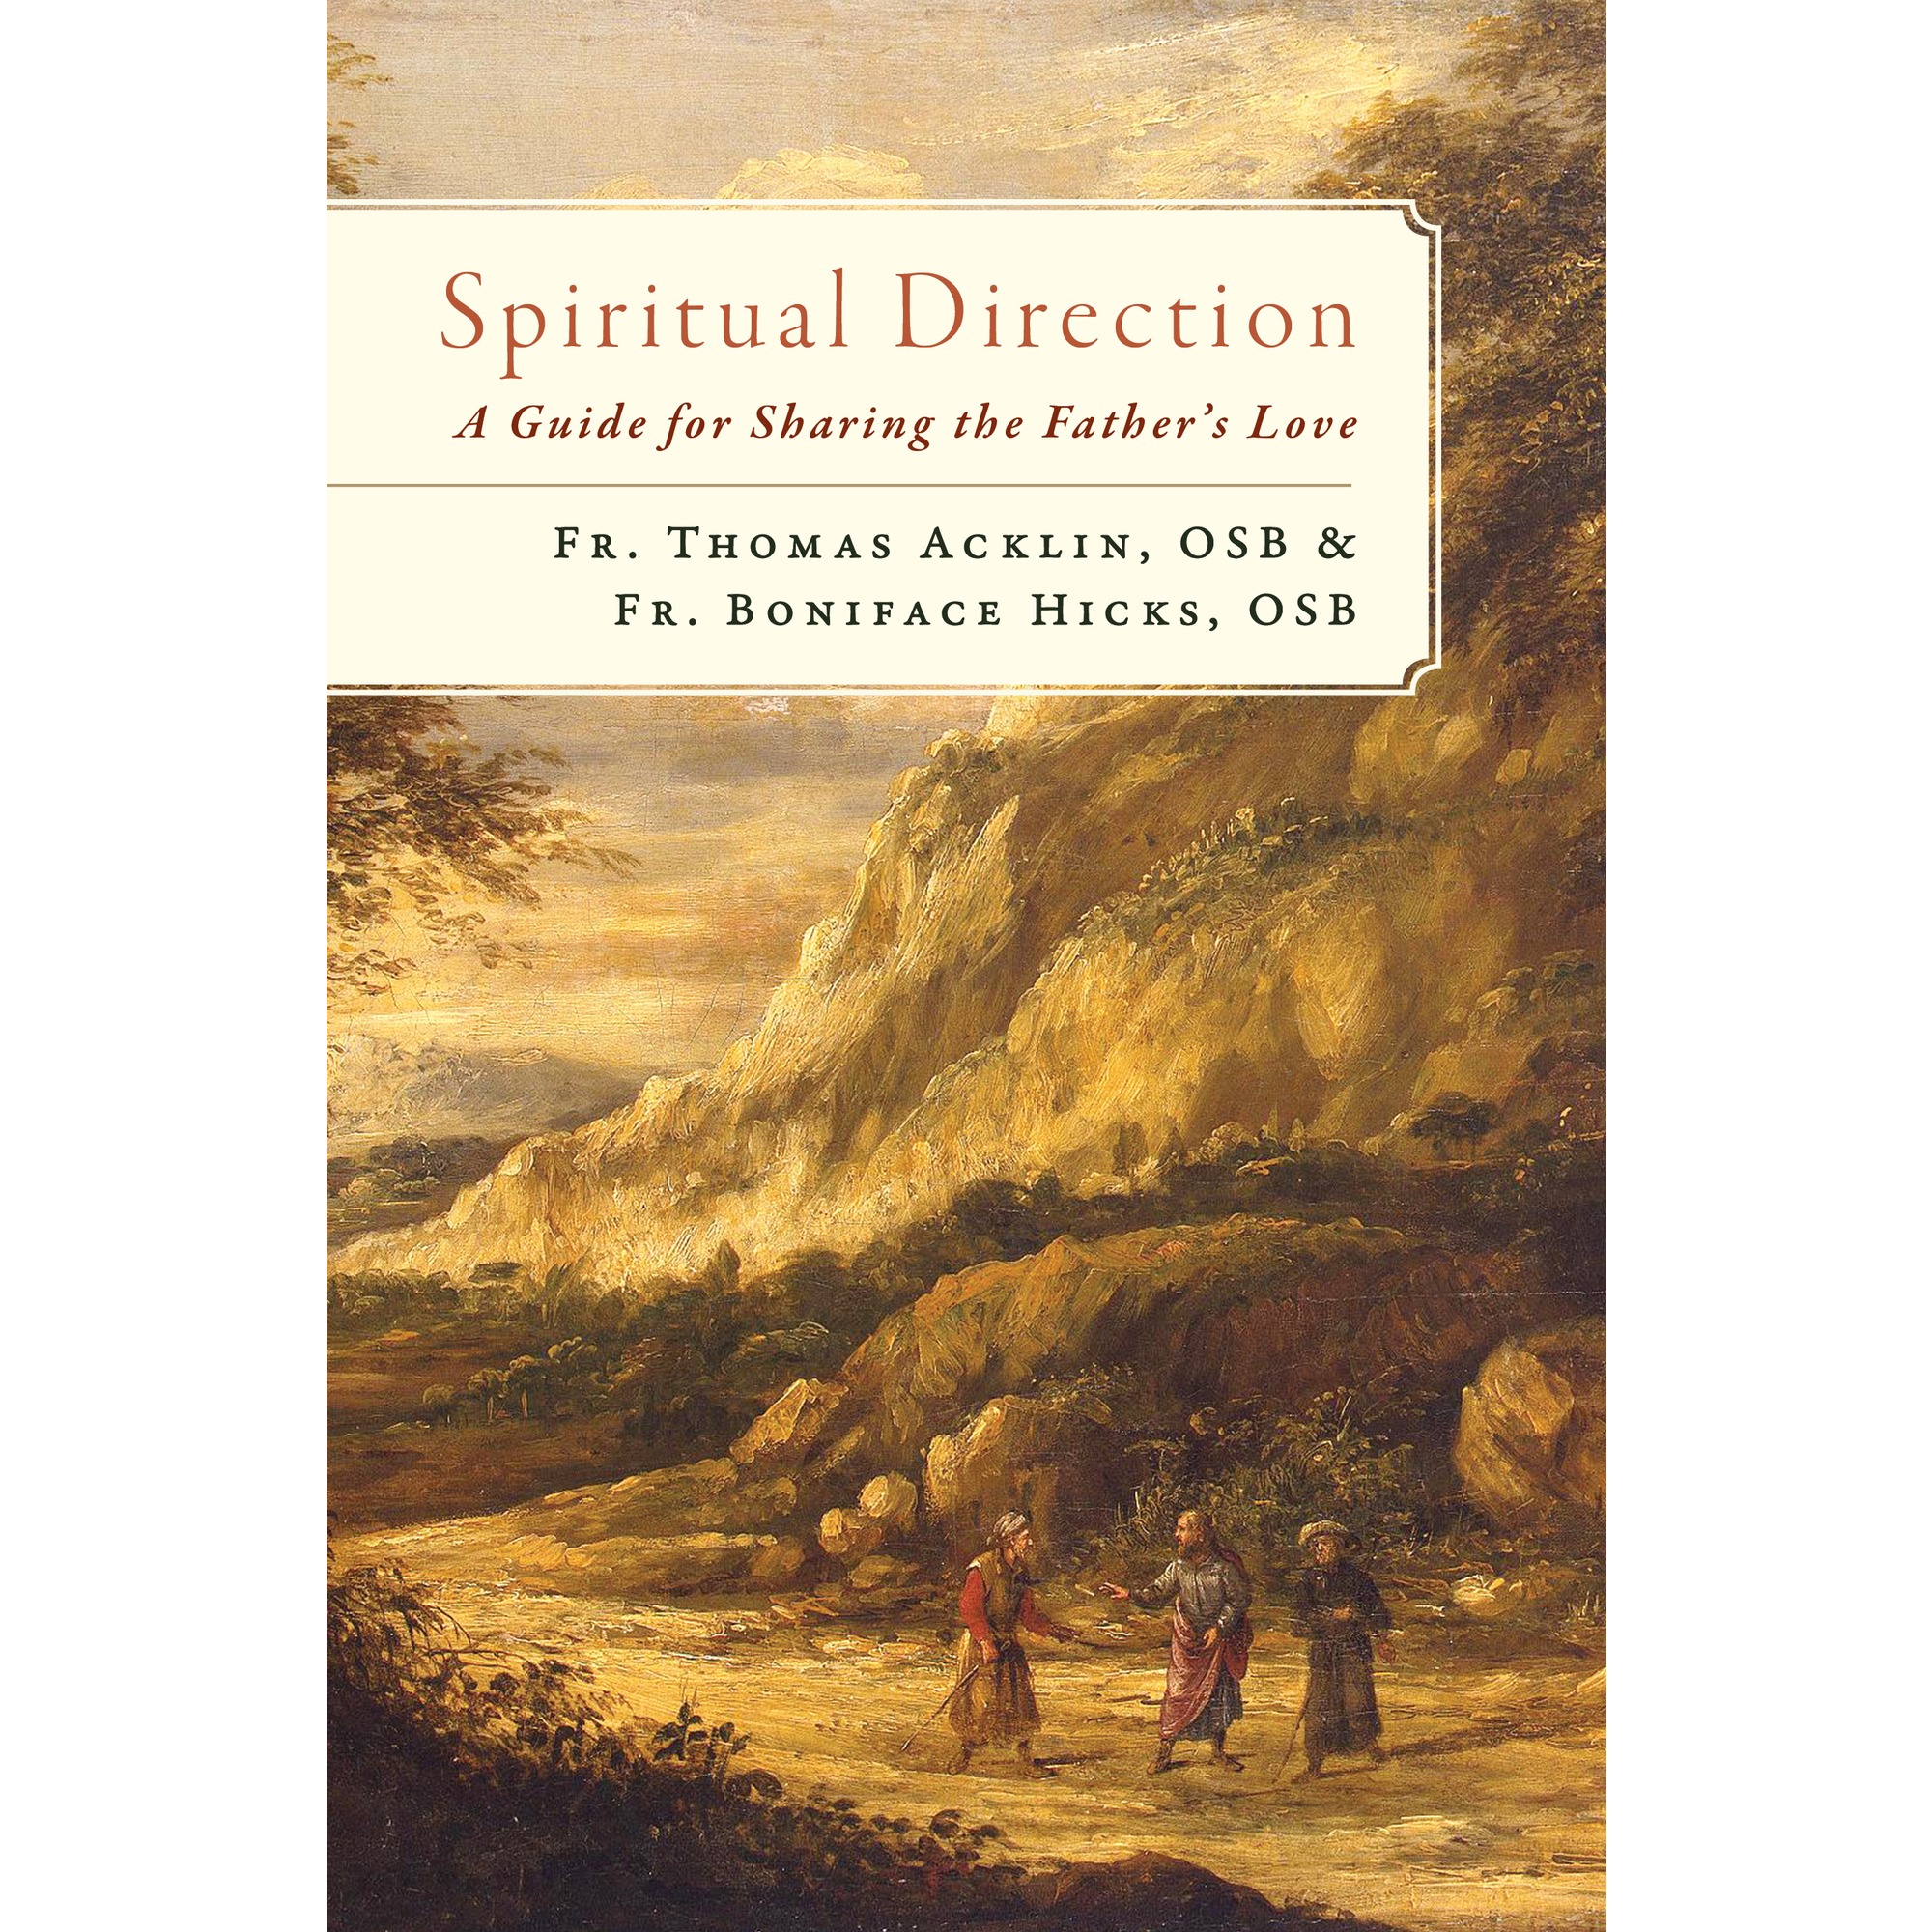 catholic spiritual direction